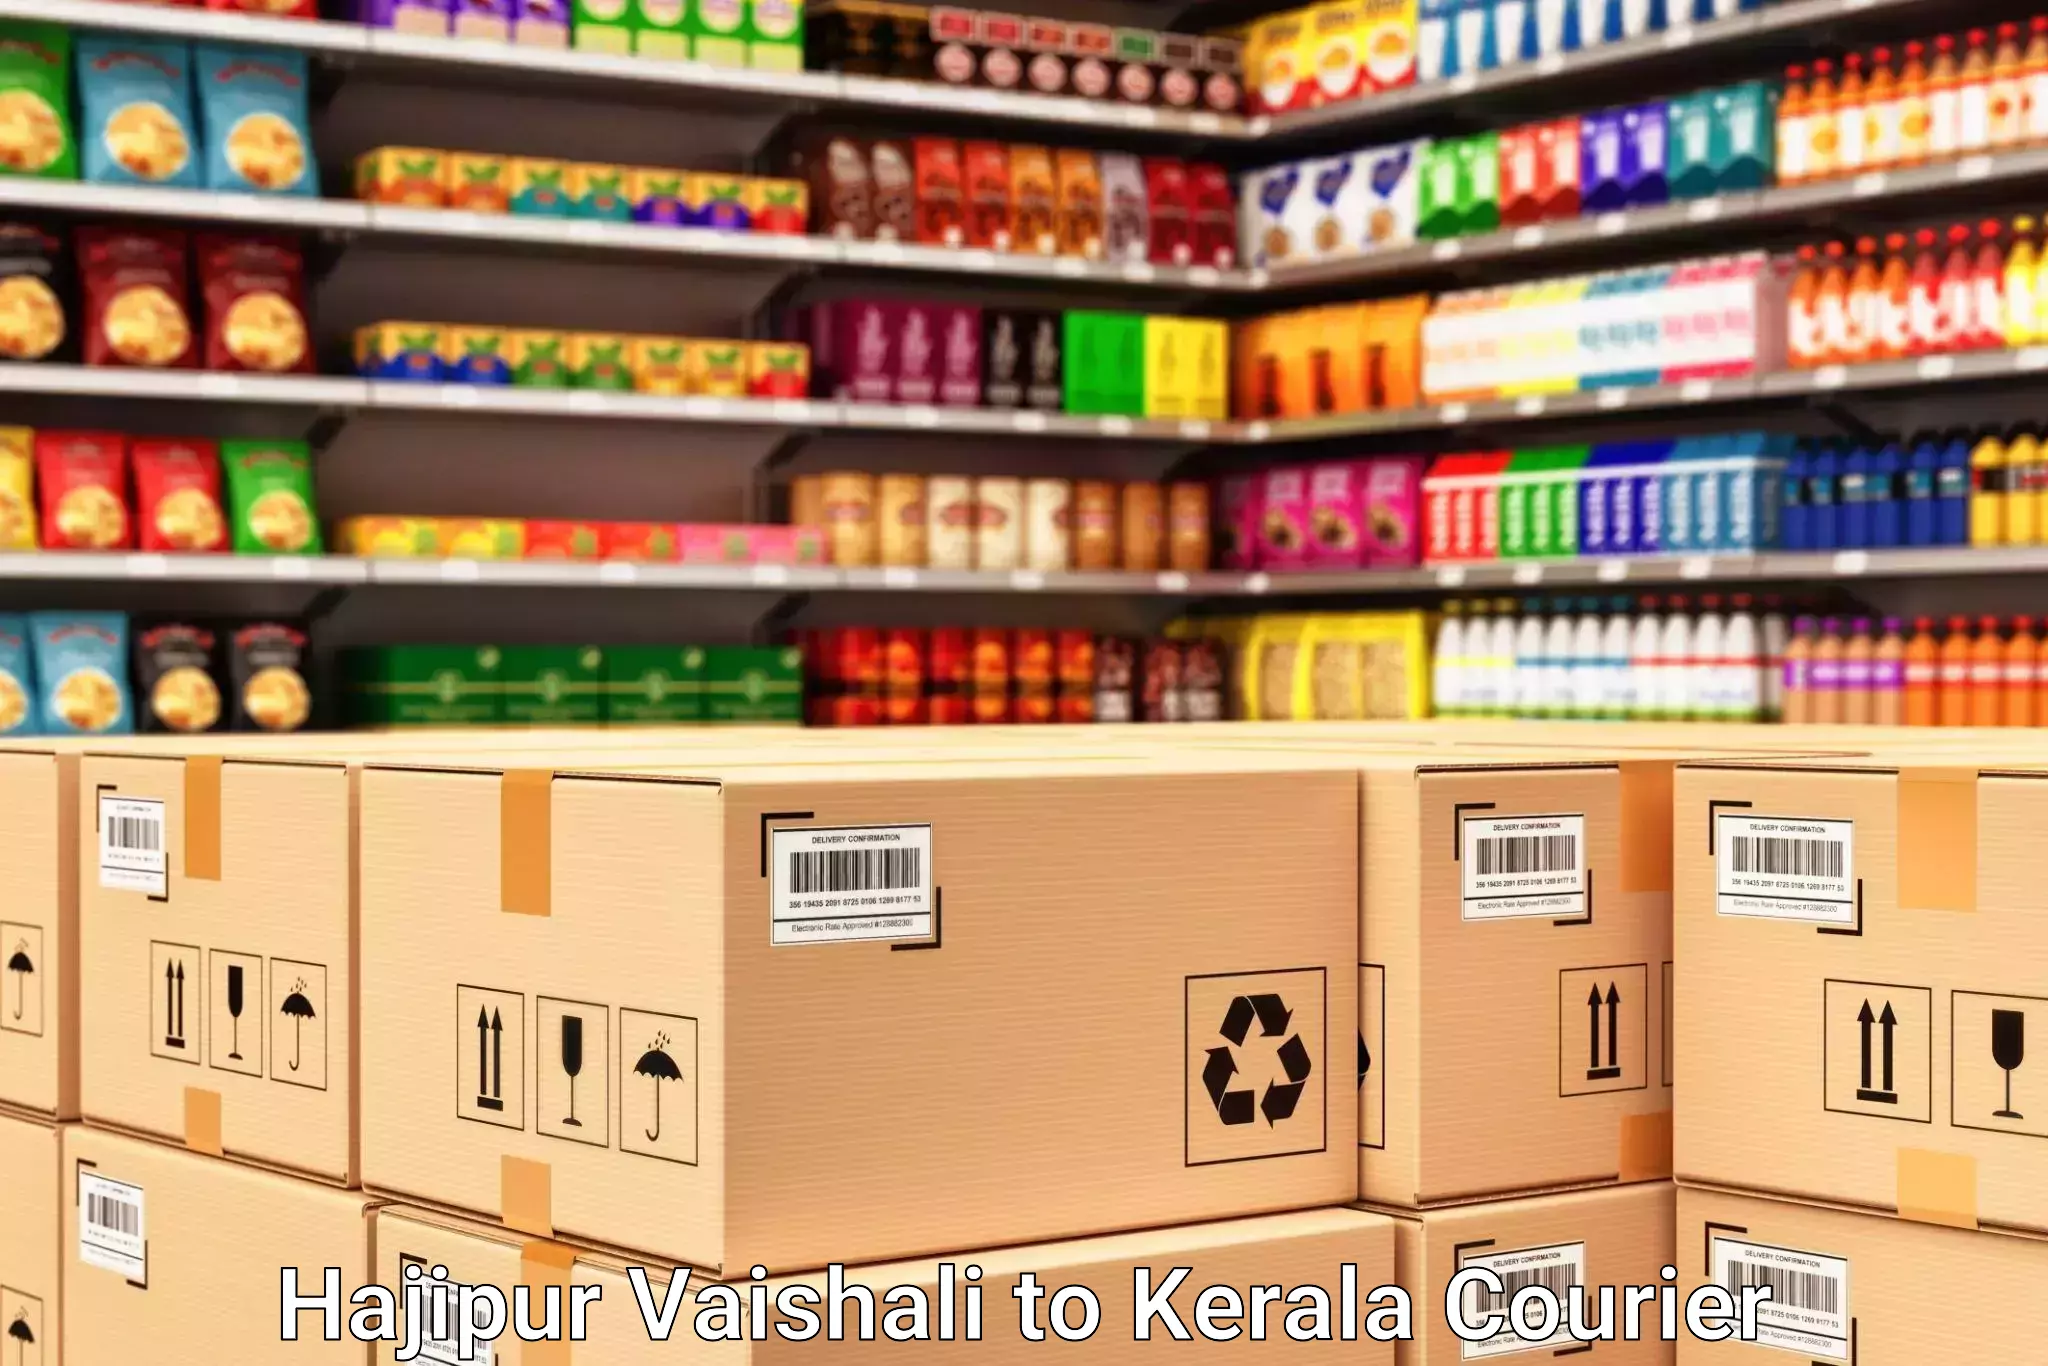 Luggage transport consultancy Hajipur Vaishali to Kerala